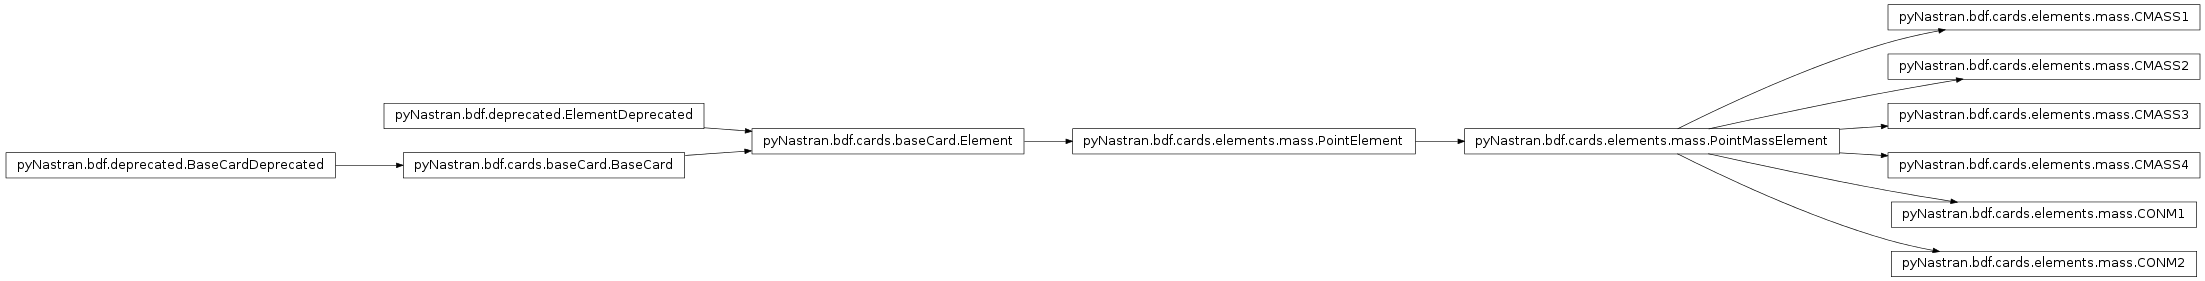 Inheritance diagram of pyNastran.bdf.cards.elements.mass